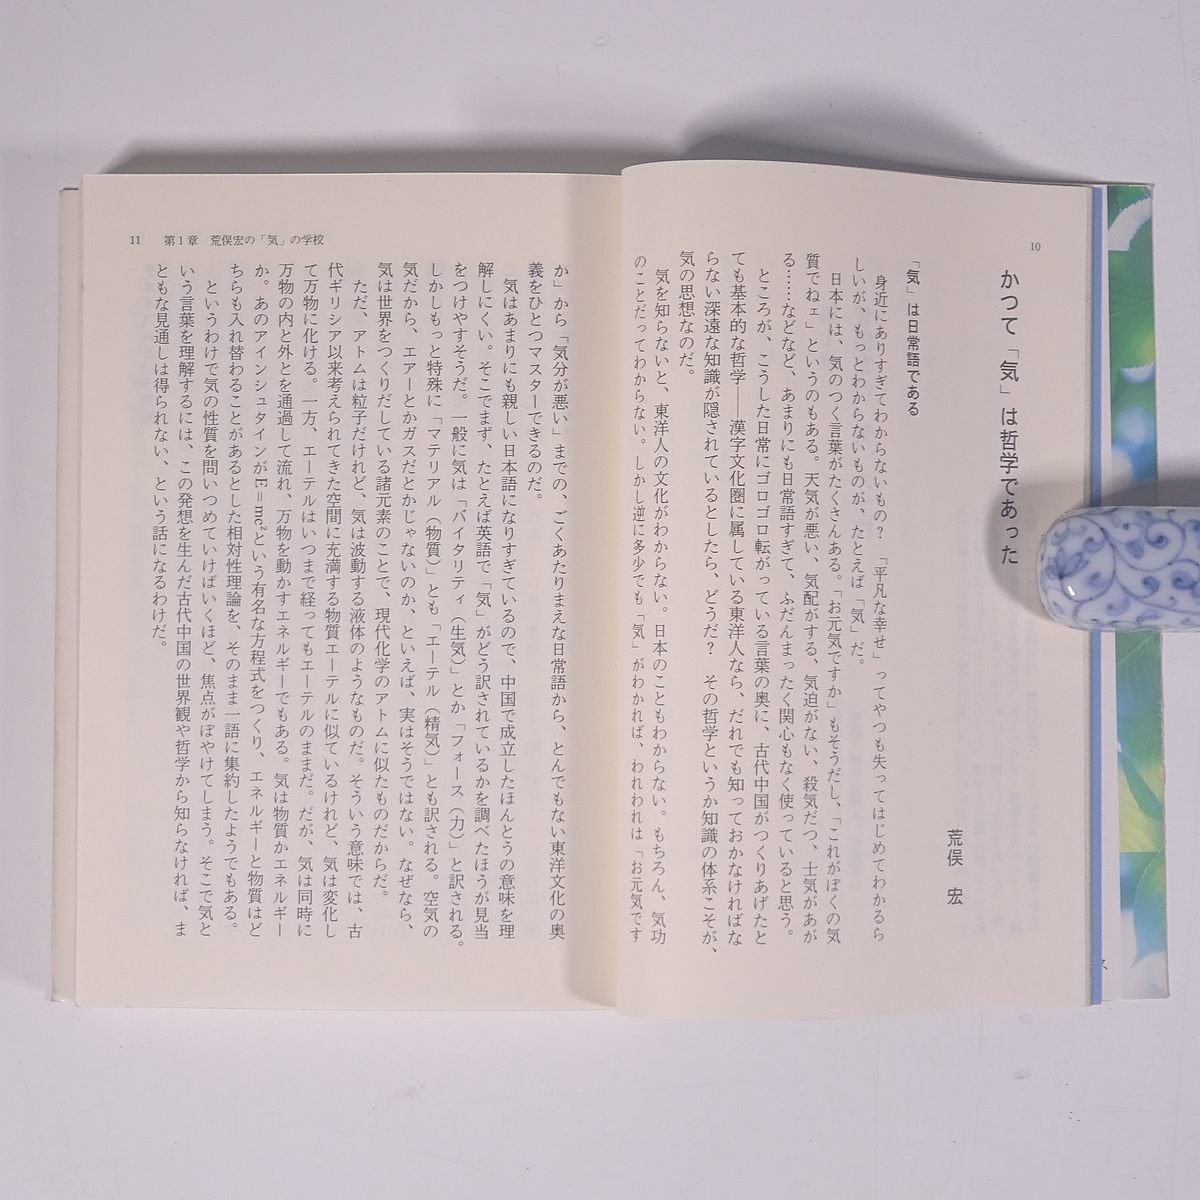 [.]... China four thousand year. [ qigong ] energy ... Shueisha Bunko 1995 library book@ health qigong 